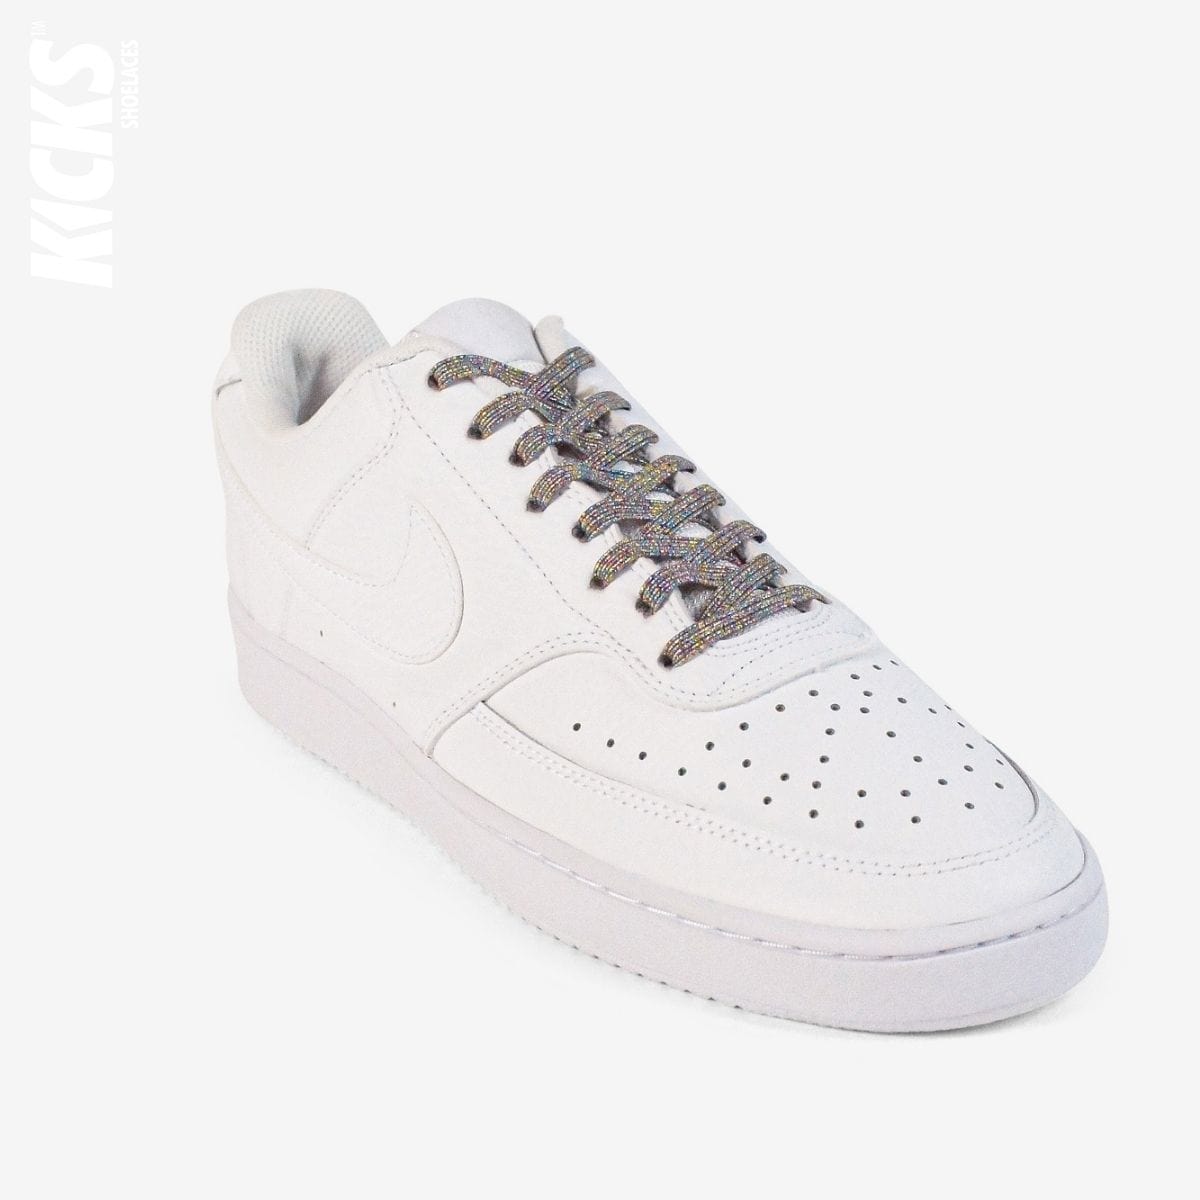 elastic-no-tie-shoelaces-with-metallic-spray-laces-on-nike-white-sneakers